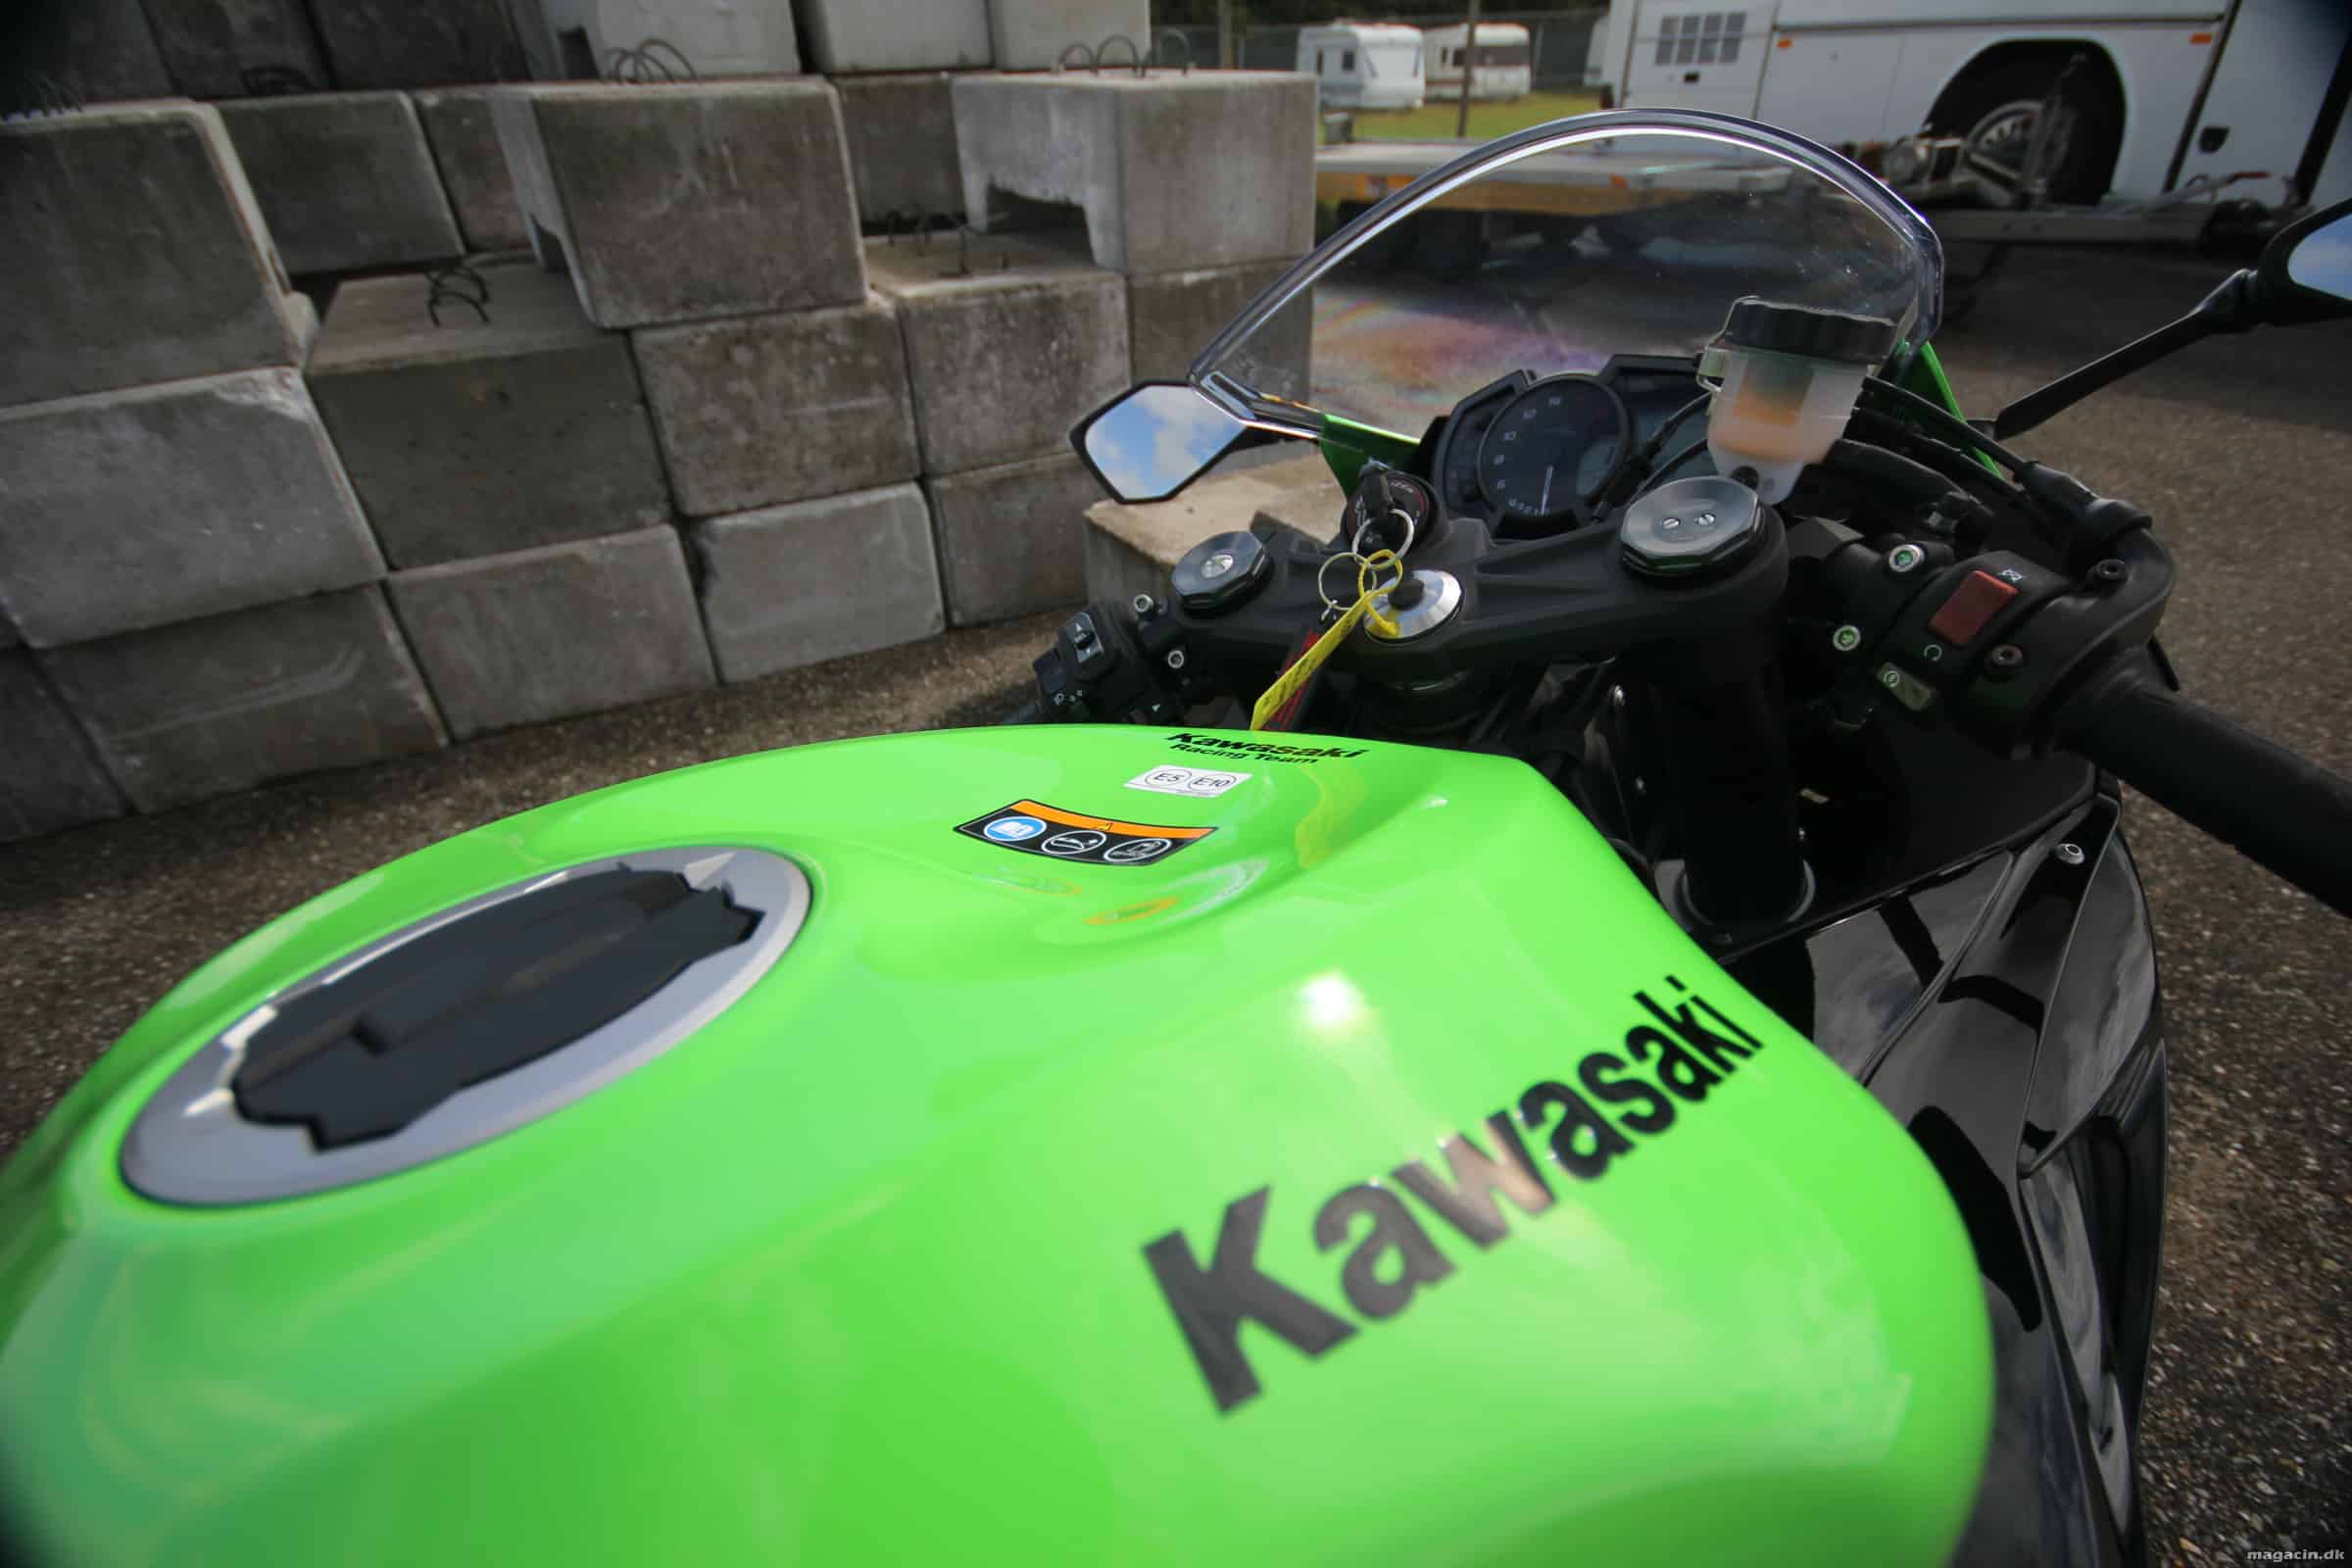 Test: 2019 Kawasaki ZX6R – Super værdi for pengene